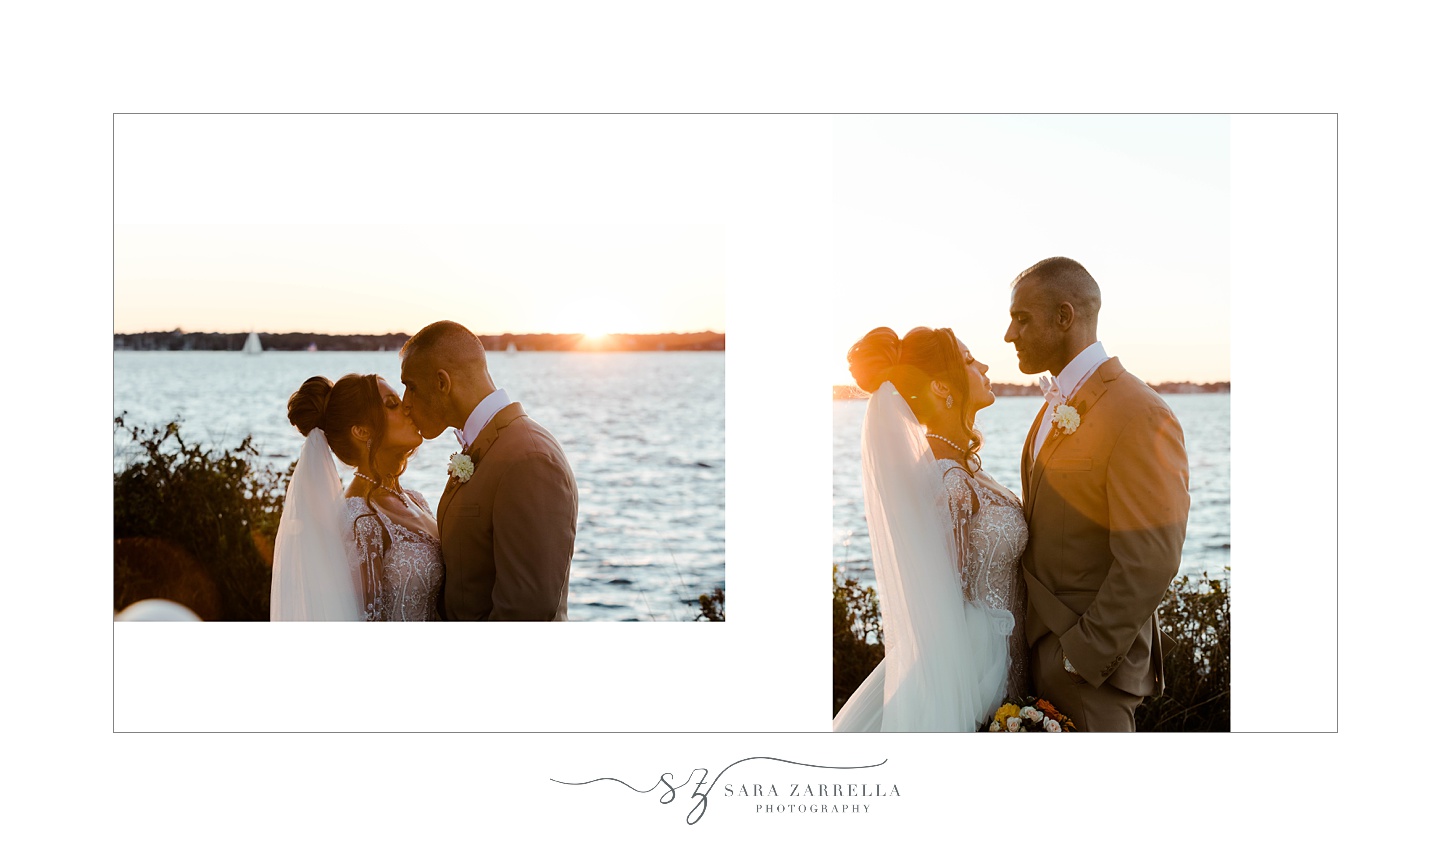 Newport Harbor Island resort wedding storybook album by Sara Zarrella Photography 